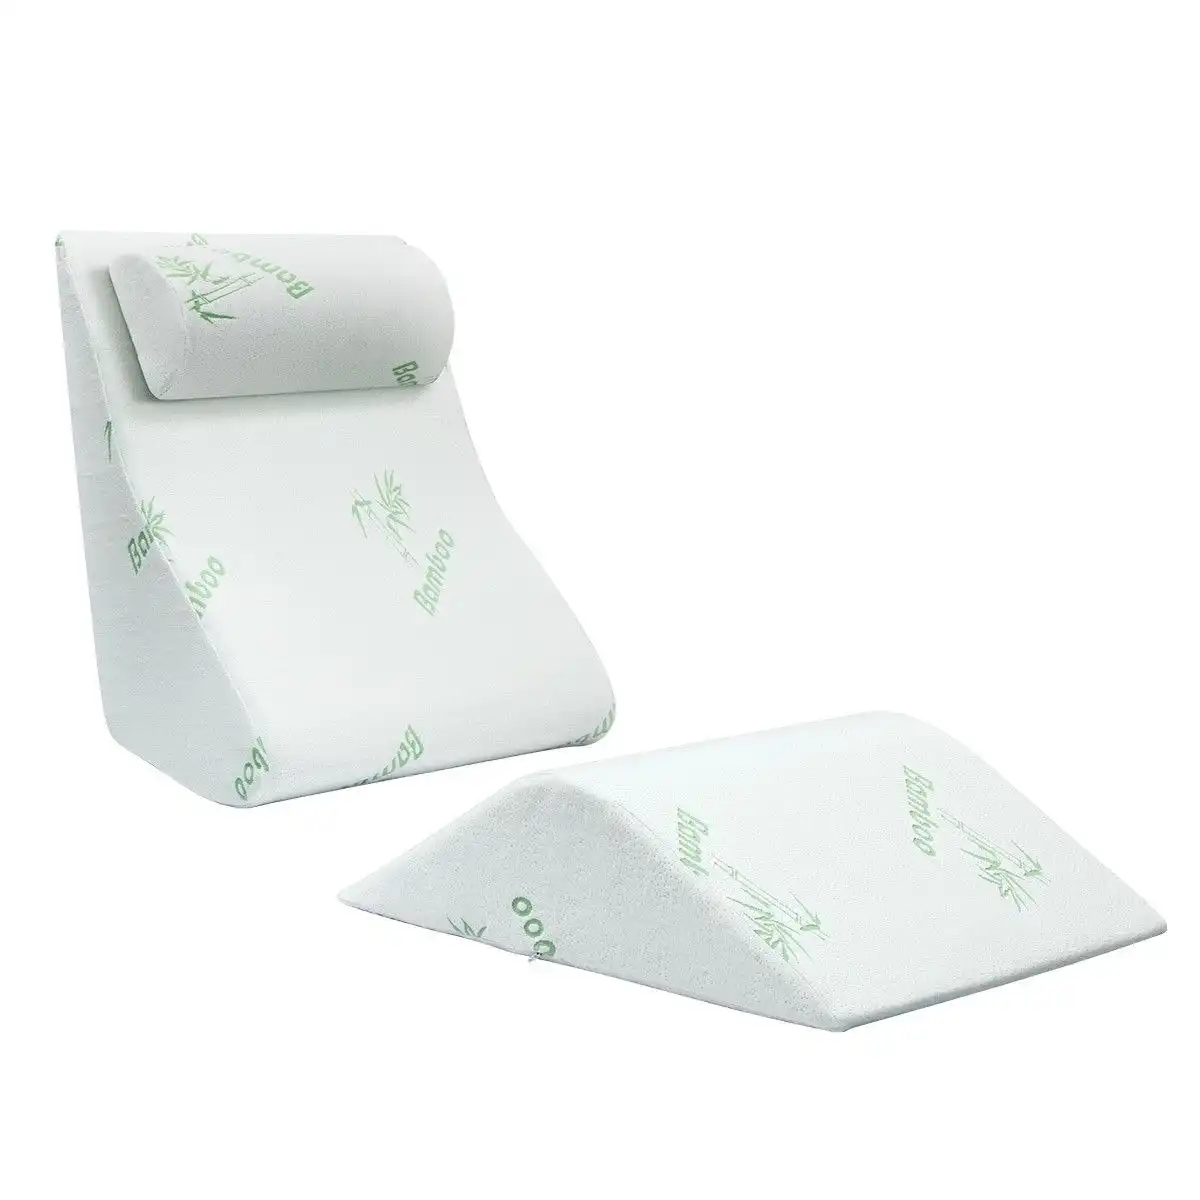 Luxdream  3 Pcs Foam Bed Wedge Pillow Headrest Leg Elevation Pillow Breathable Cover